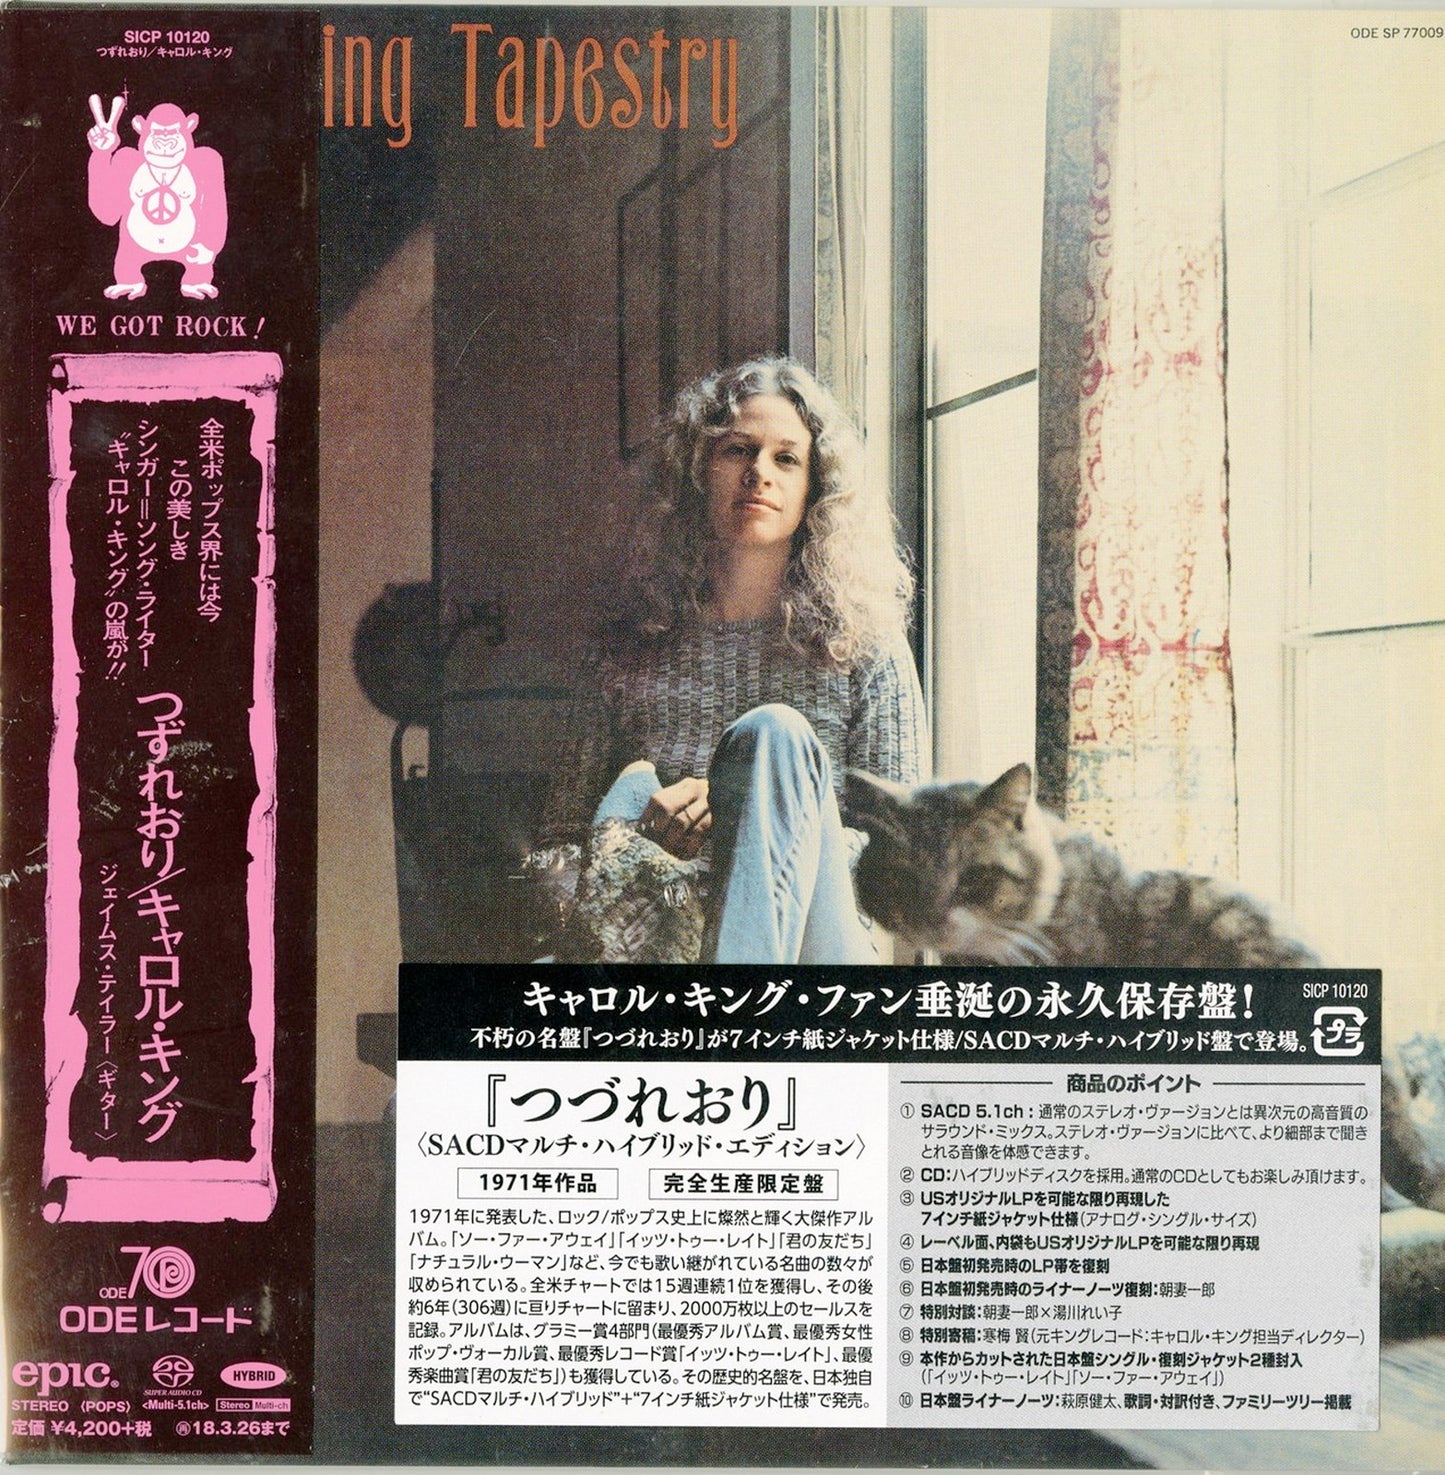 Carole King - Tapestry - Japan  7inch Mini LP SACD Hybrid Bonus Track Limited Edition